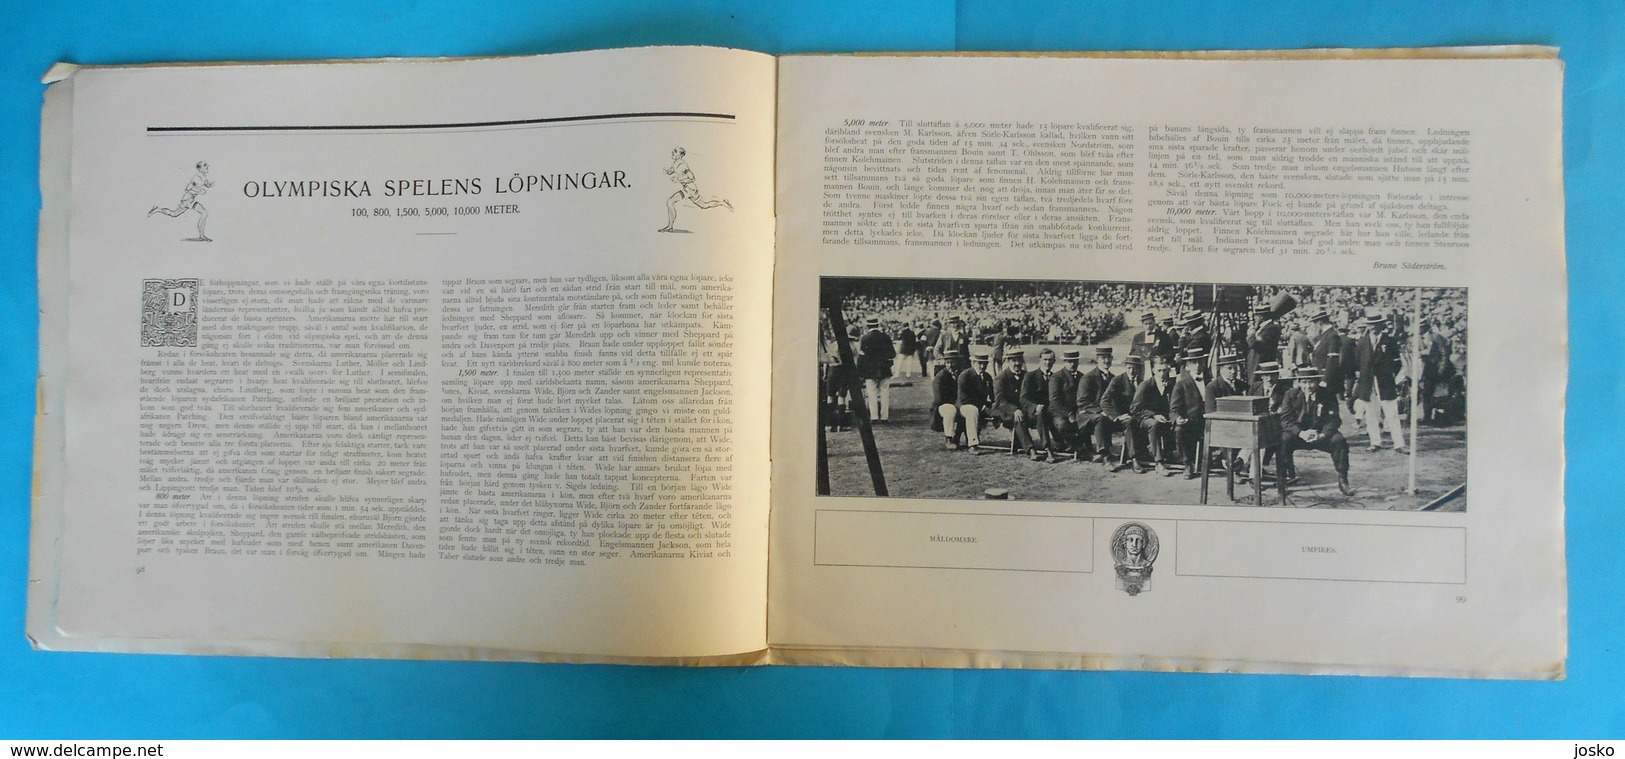 ATHLETICS On OLYMPIC GAMES 1912 STOCKHOLM - Original Vintage Programme * Athletisme Atletismo Atletica Athletik Athletic - Books